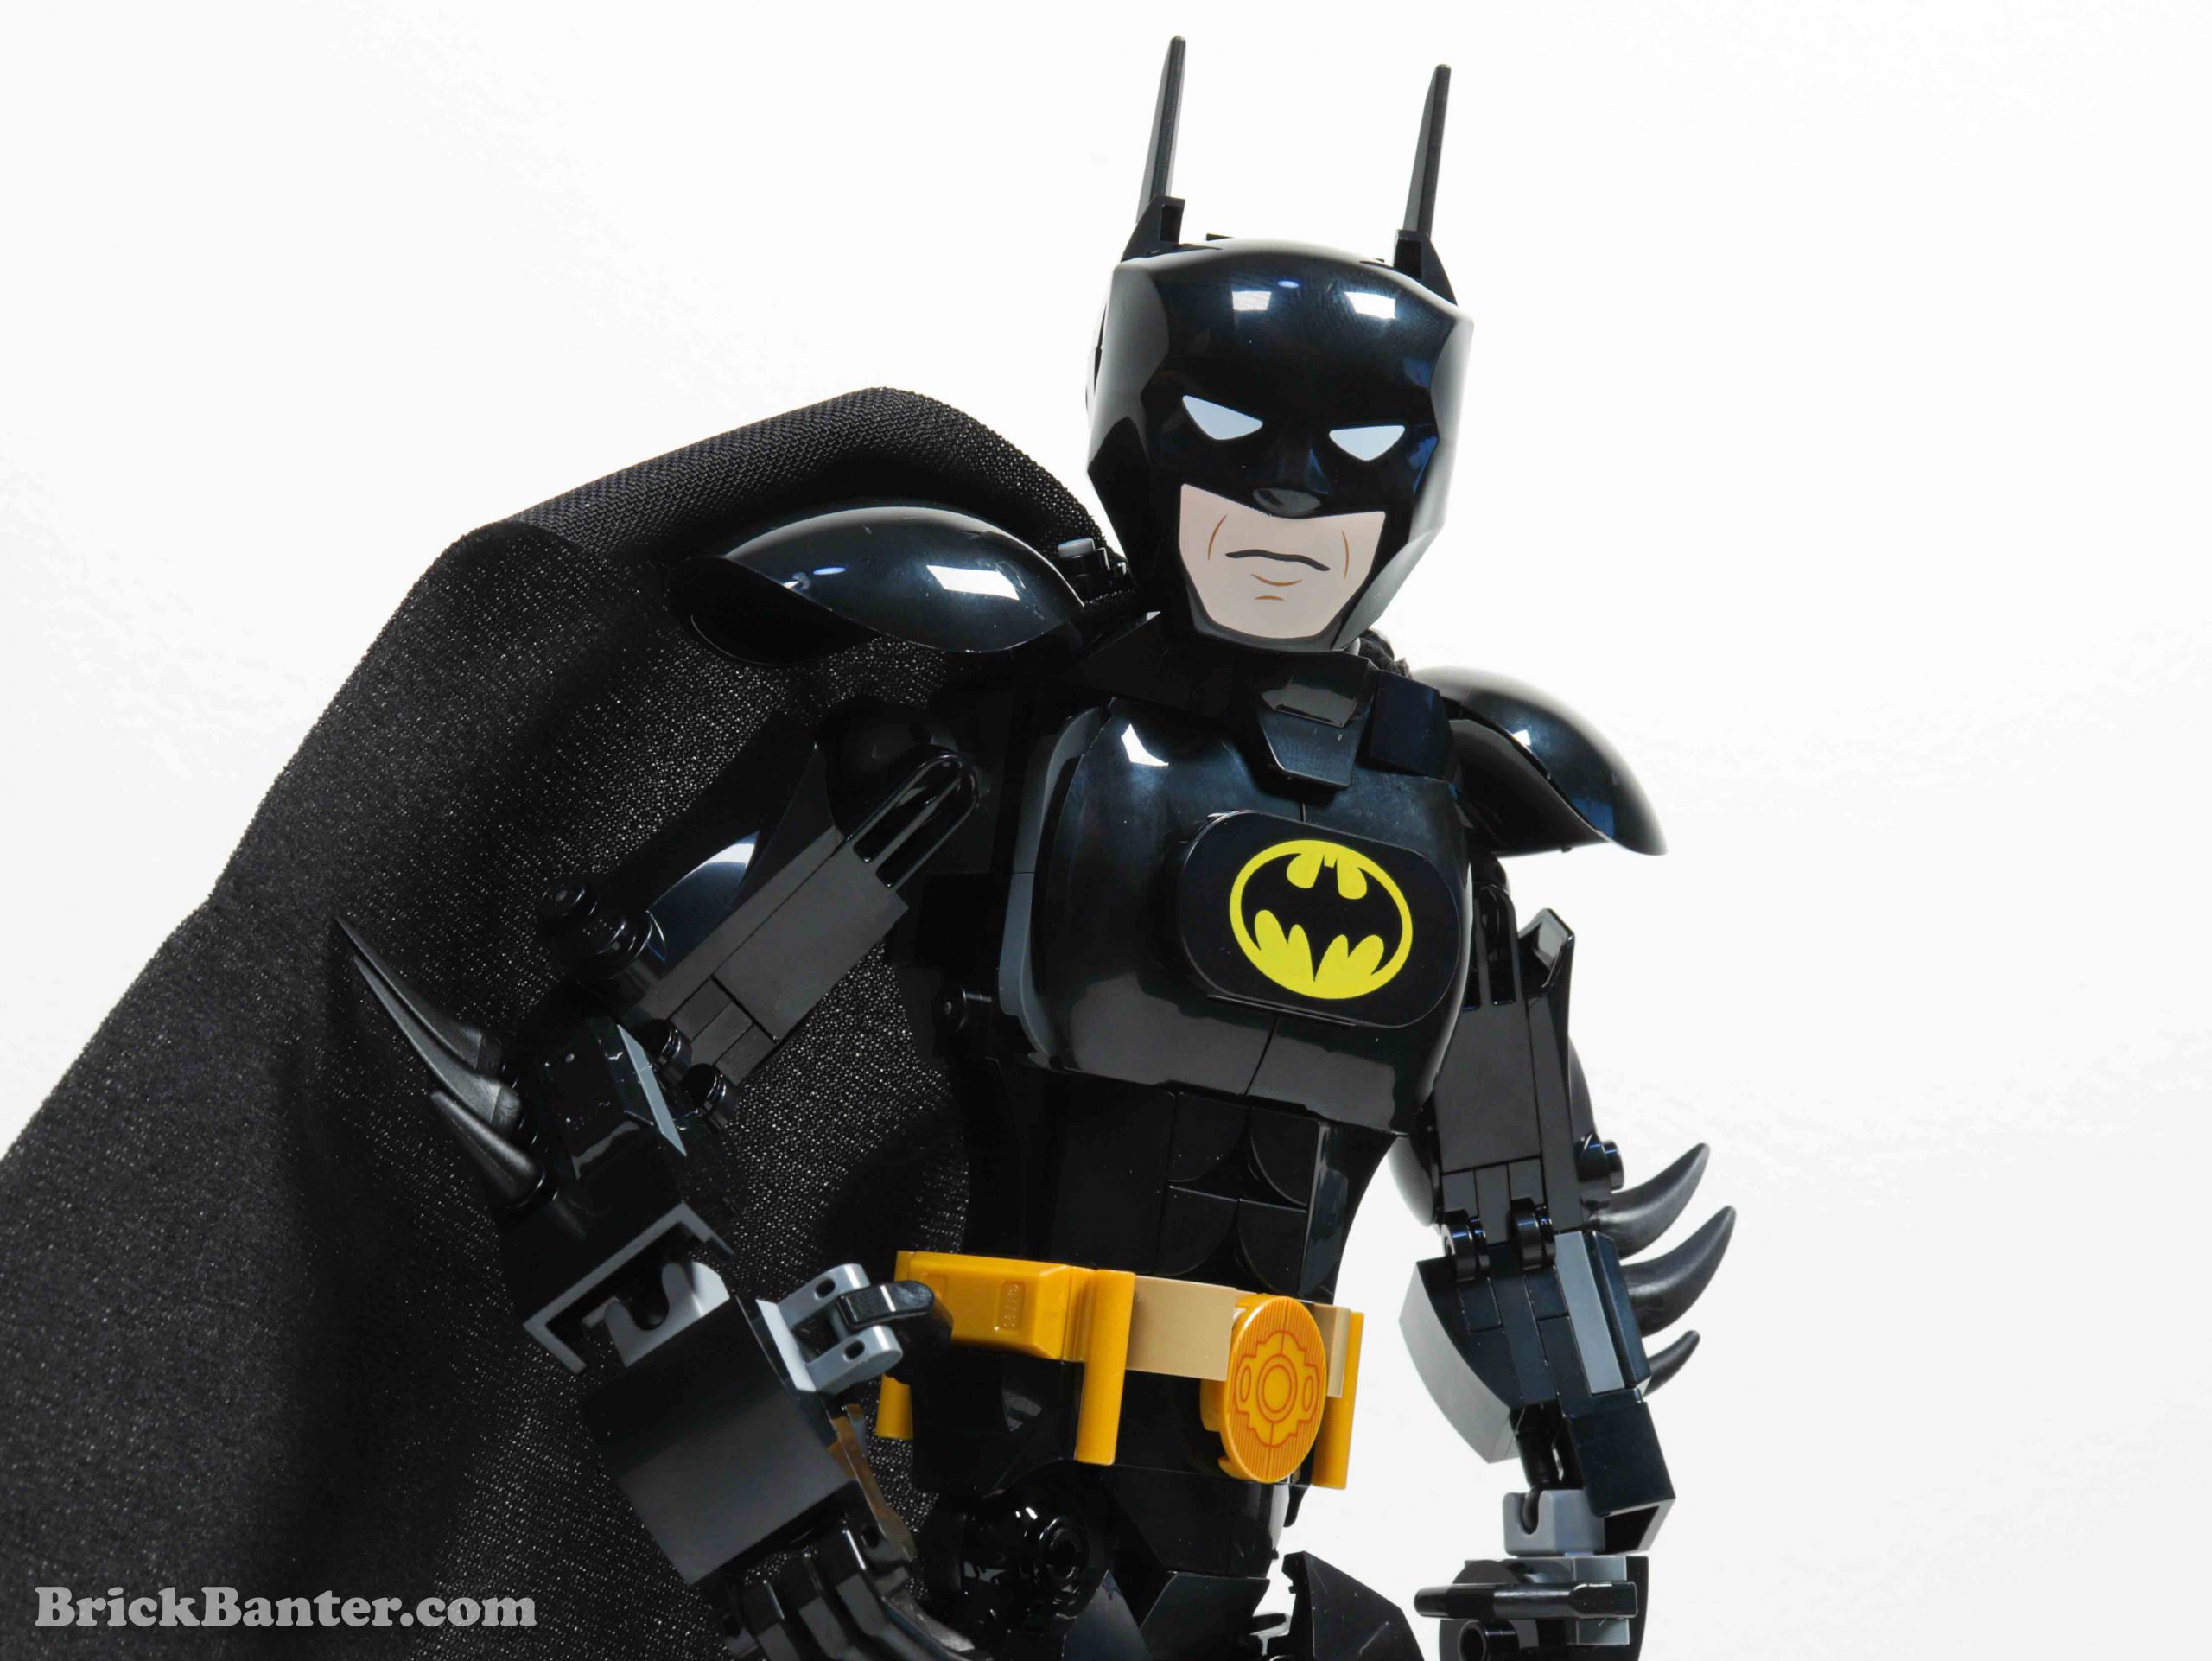 The Largest Batman Figure Date Is In June